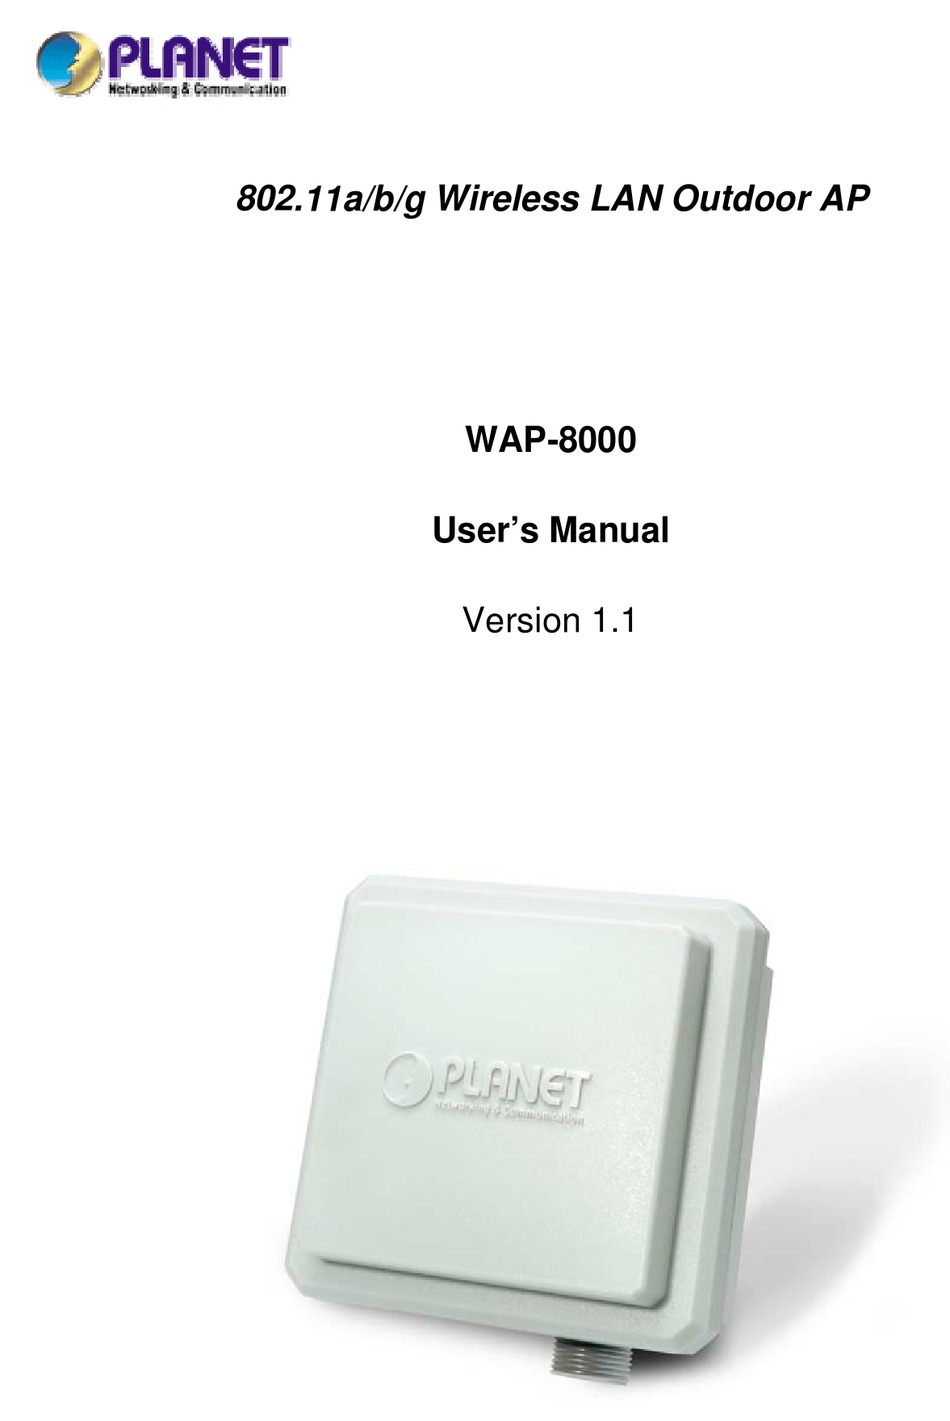 Shipmate rs 8000 user manual